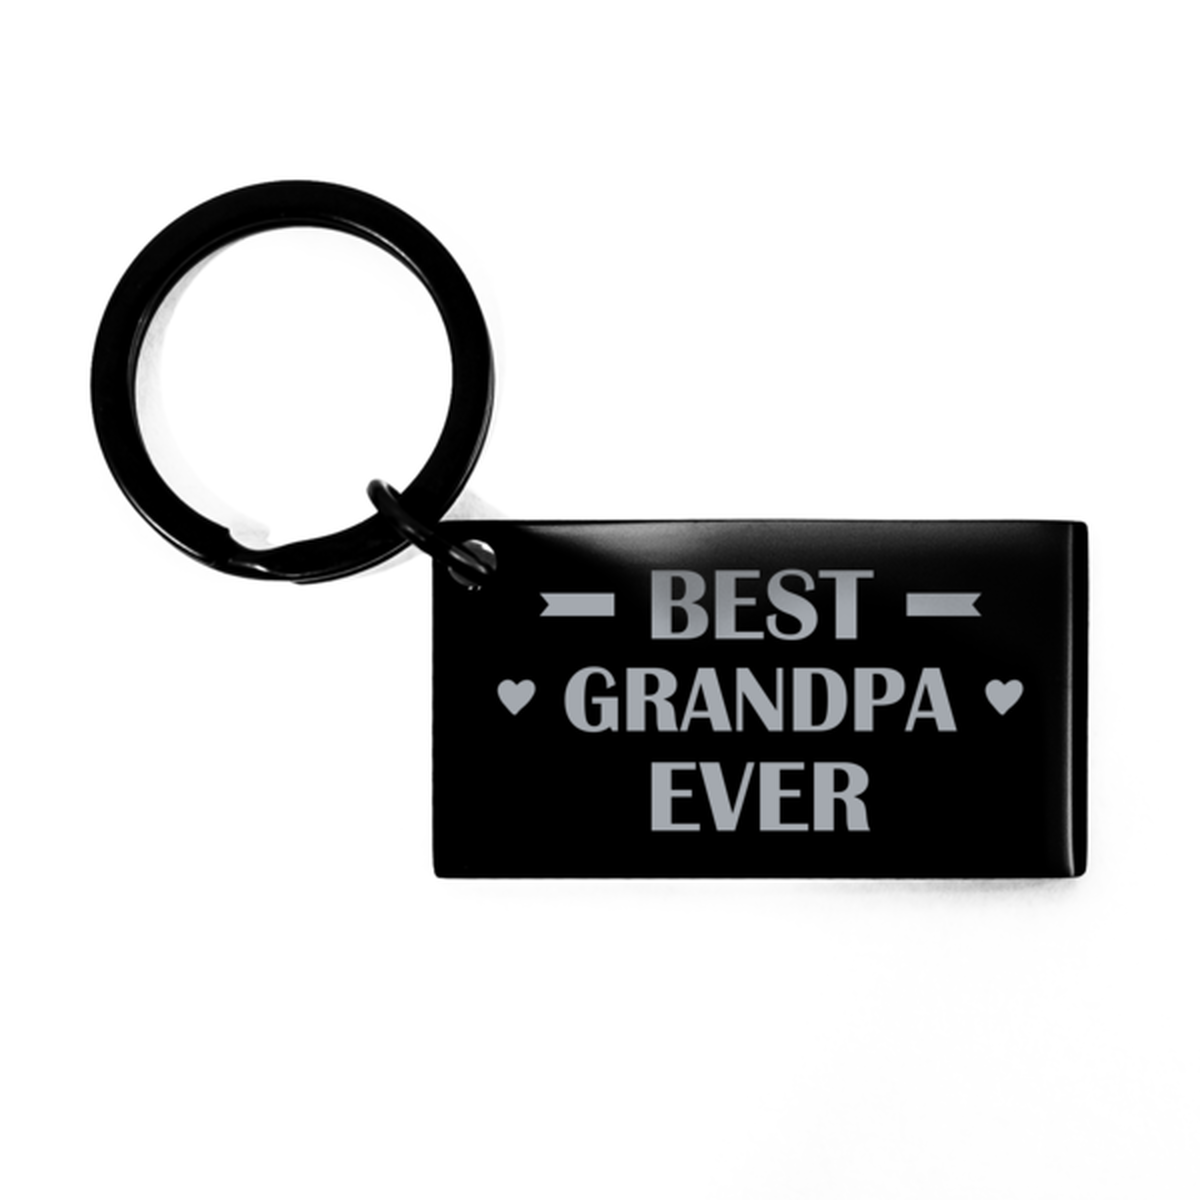 Best Grandpa Ever Grandpa Gifts, Funny Black Keychain For Grandpa, Birthday Engraved Keyring Presents For Men